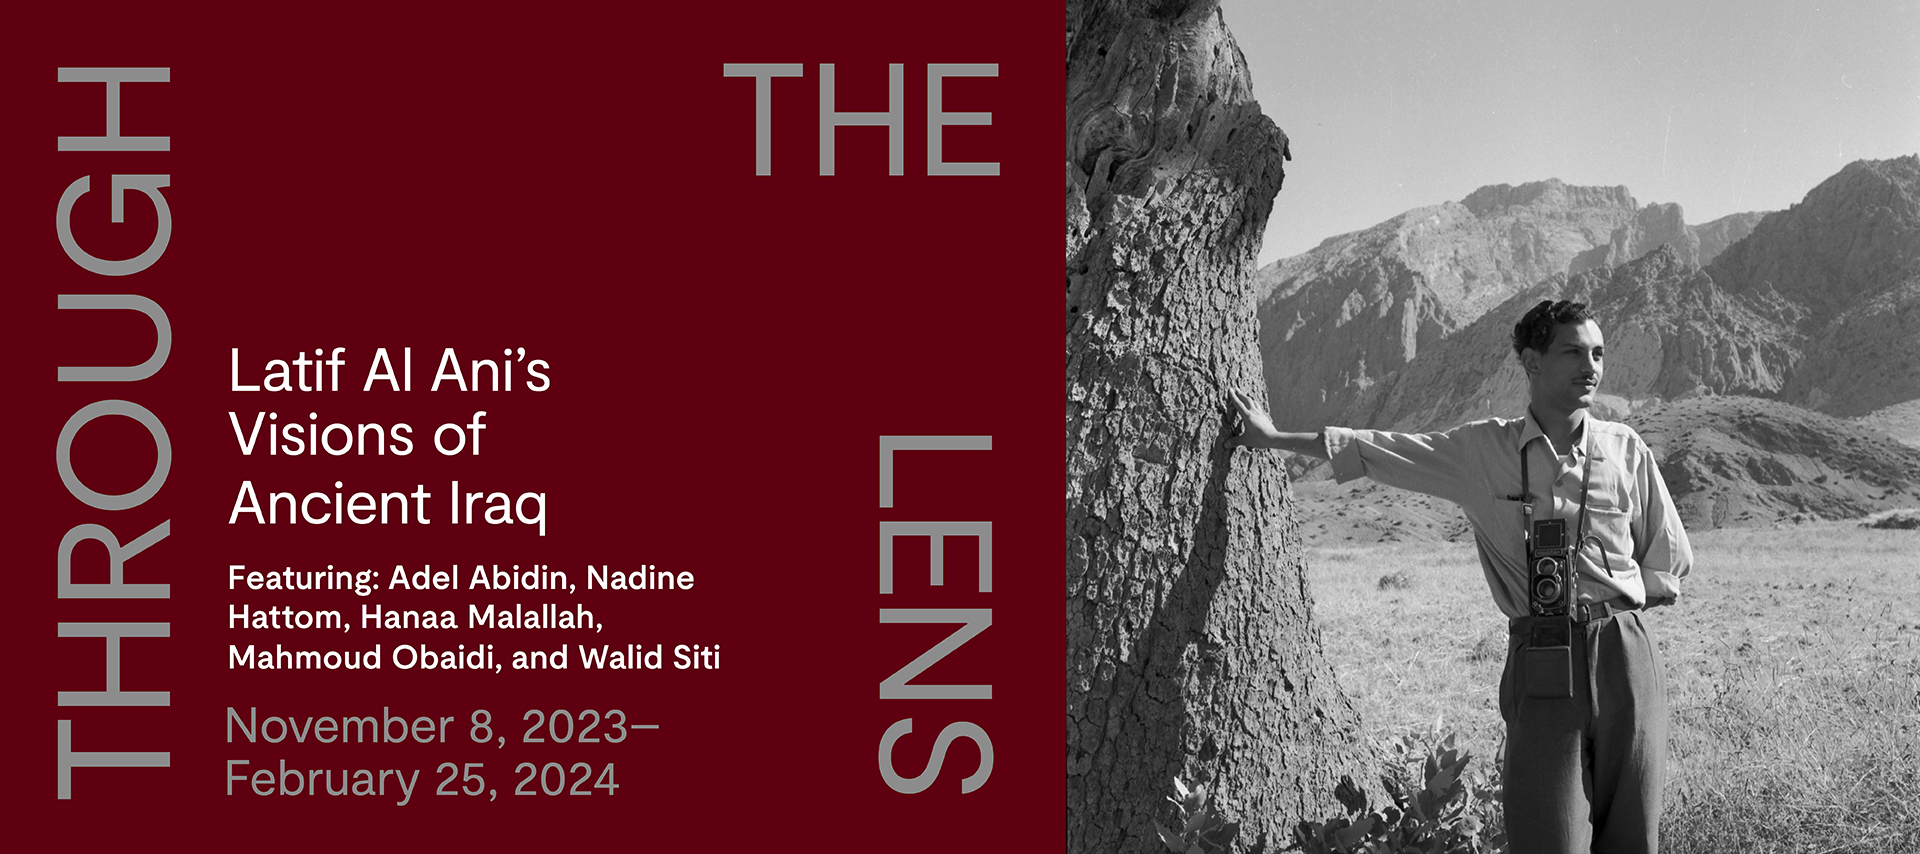 photograph of Latif al Ani next to text "Through the Lens: Latif Al Ani's Visions of Ancient Iraq featuring Adel Abidin, Nadine Hattom, Hanaa Malallah, Mahmoud Obaidi, and Walid Siti, November 8 2023 - February 25 2024